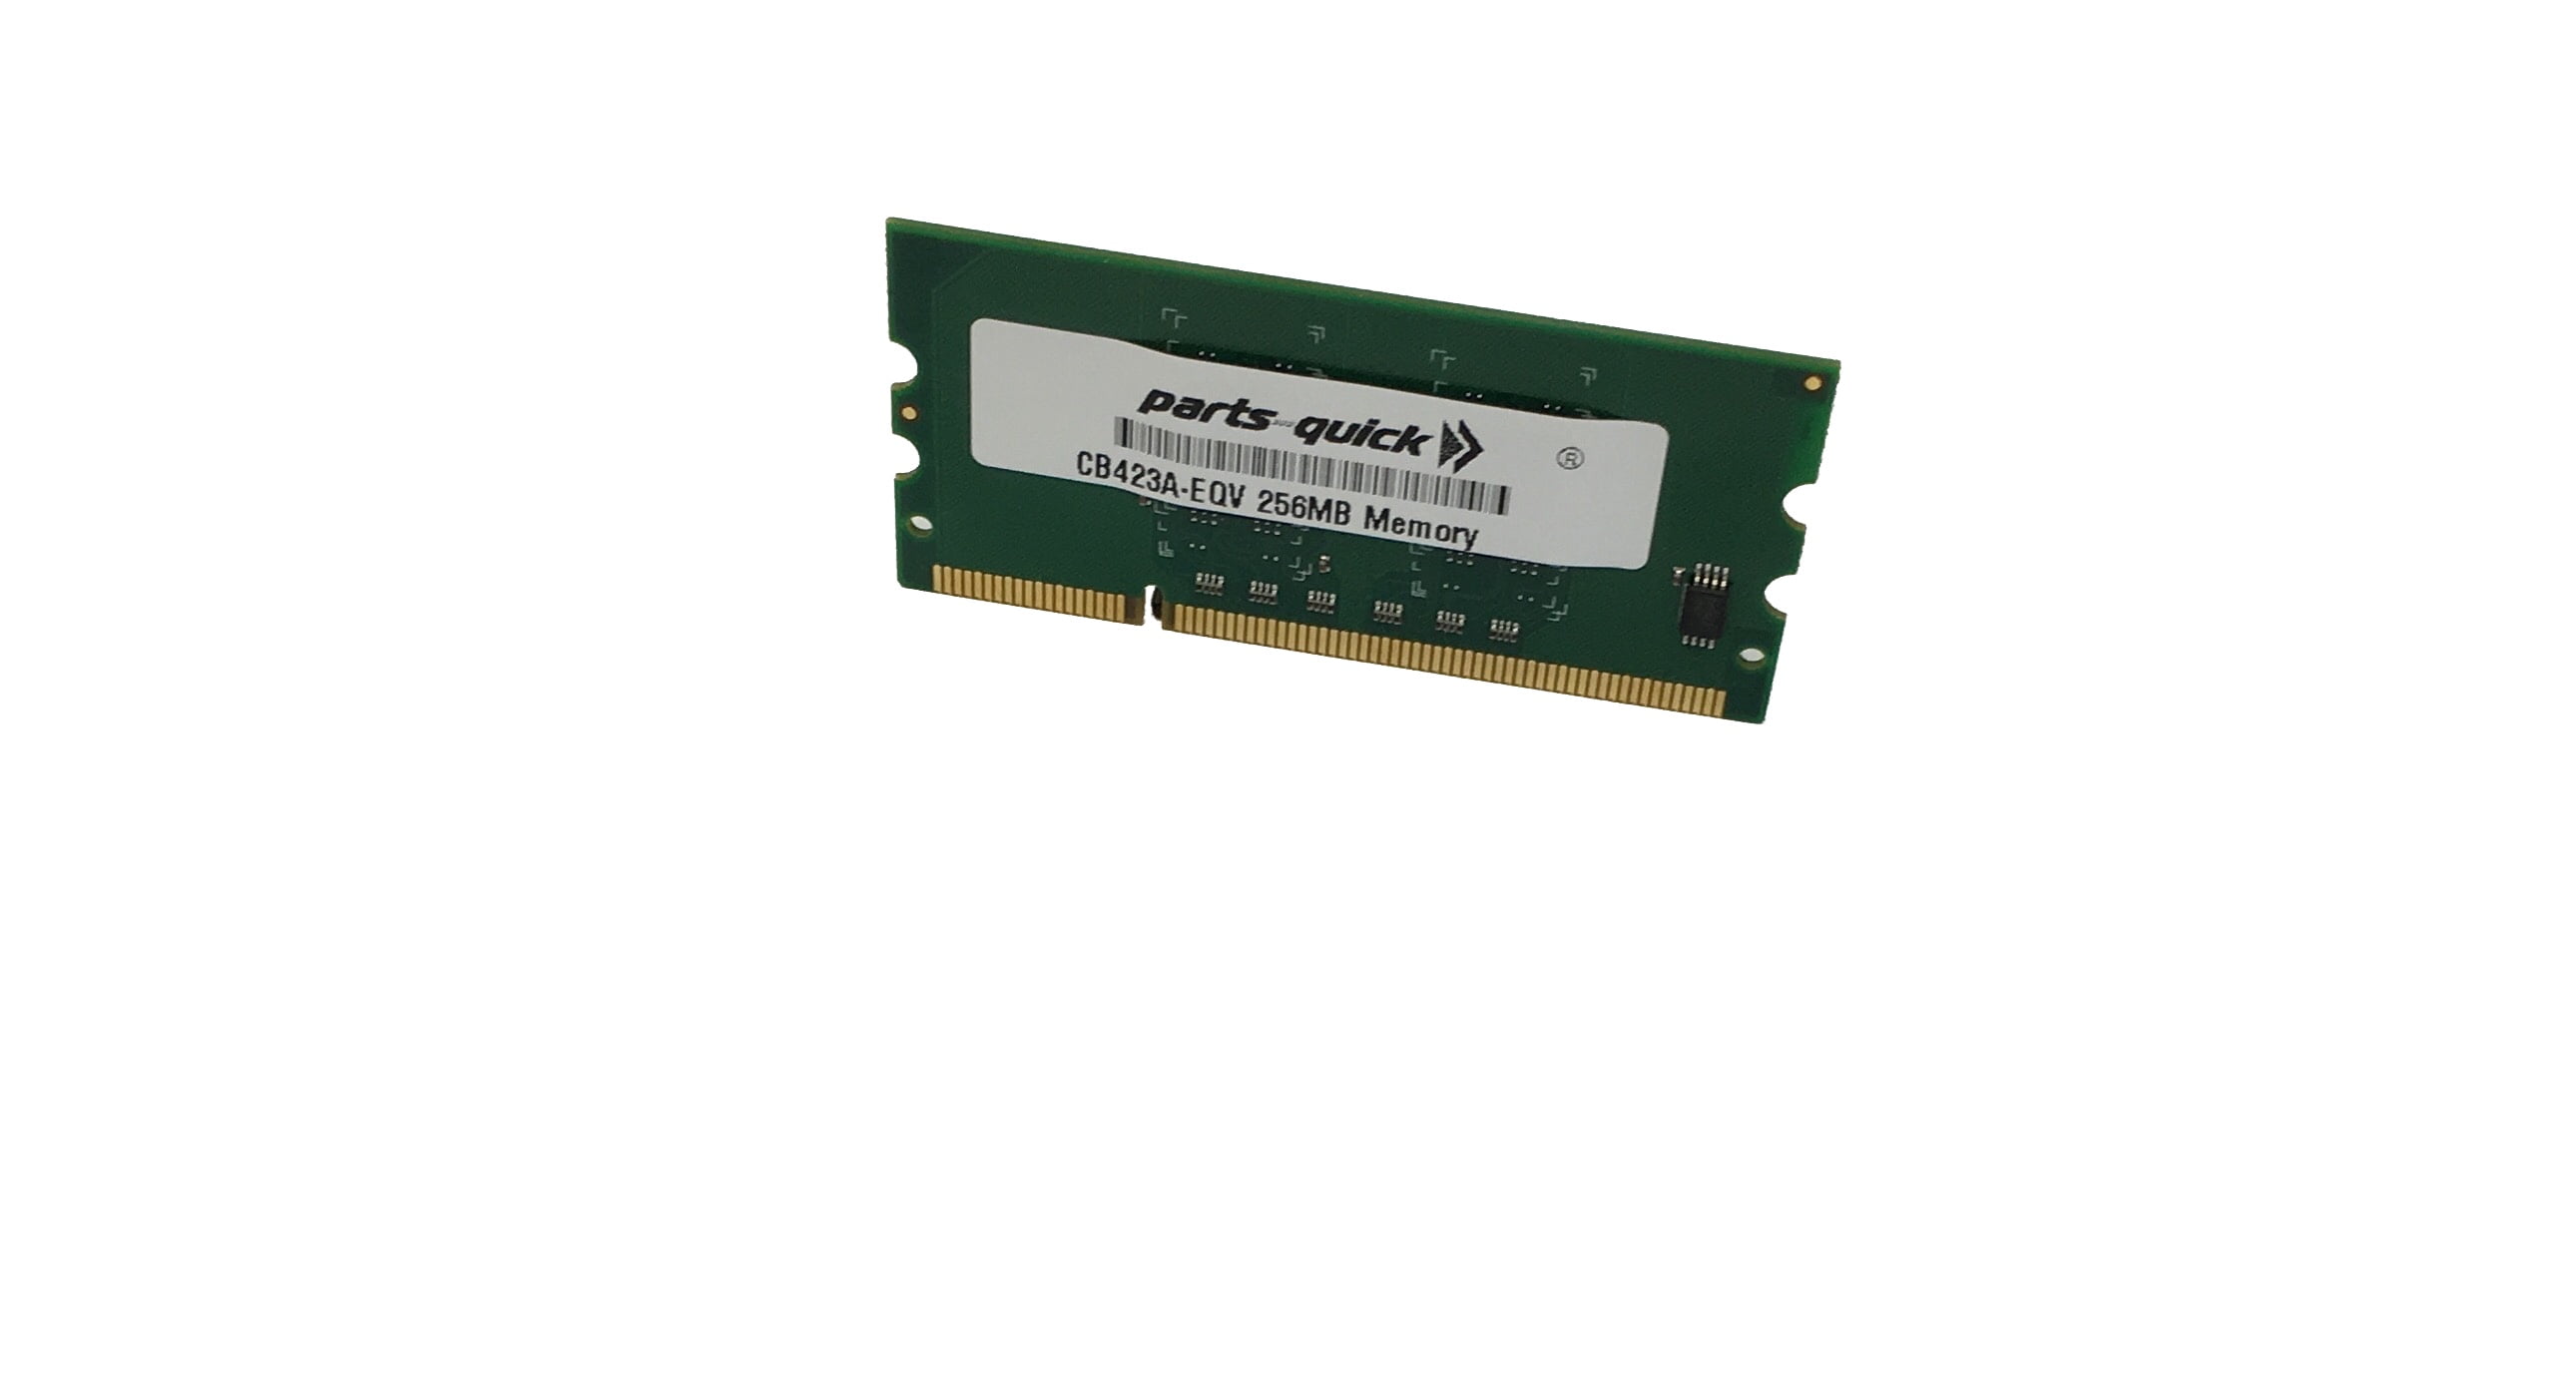 CB423A 256MB DDR2 Printer Memory HP LaserJet P2015 P2015d P2015dn P2015n P2015x 